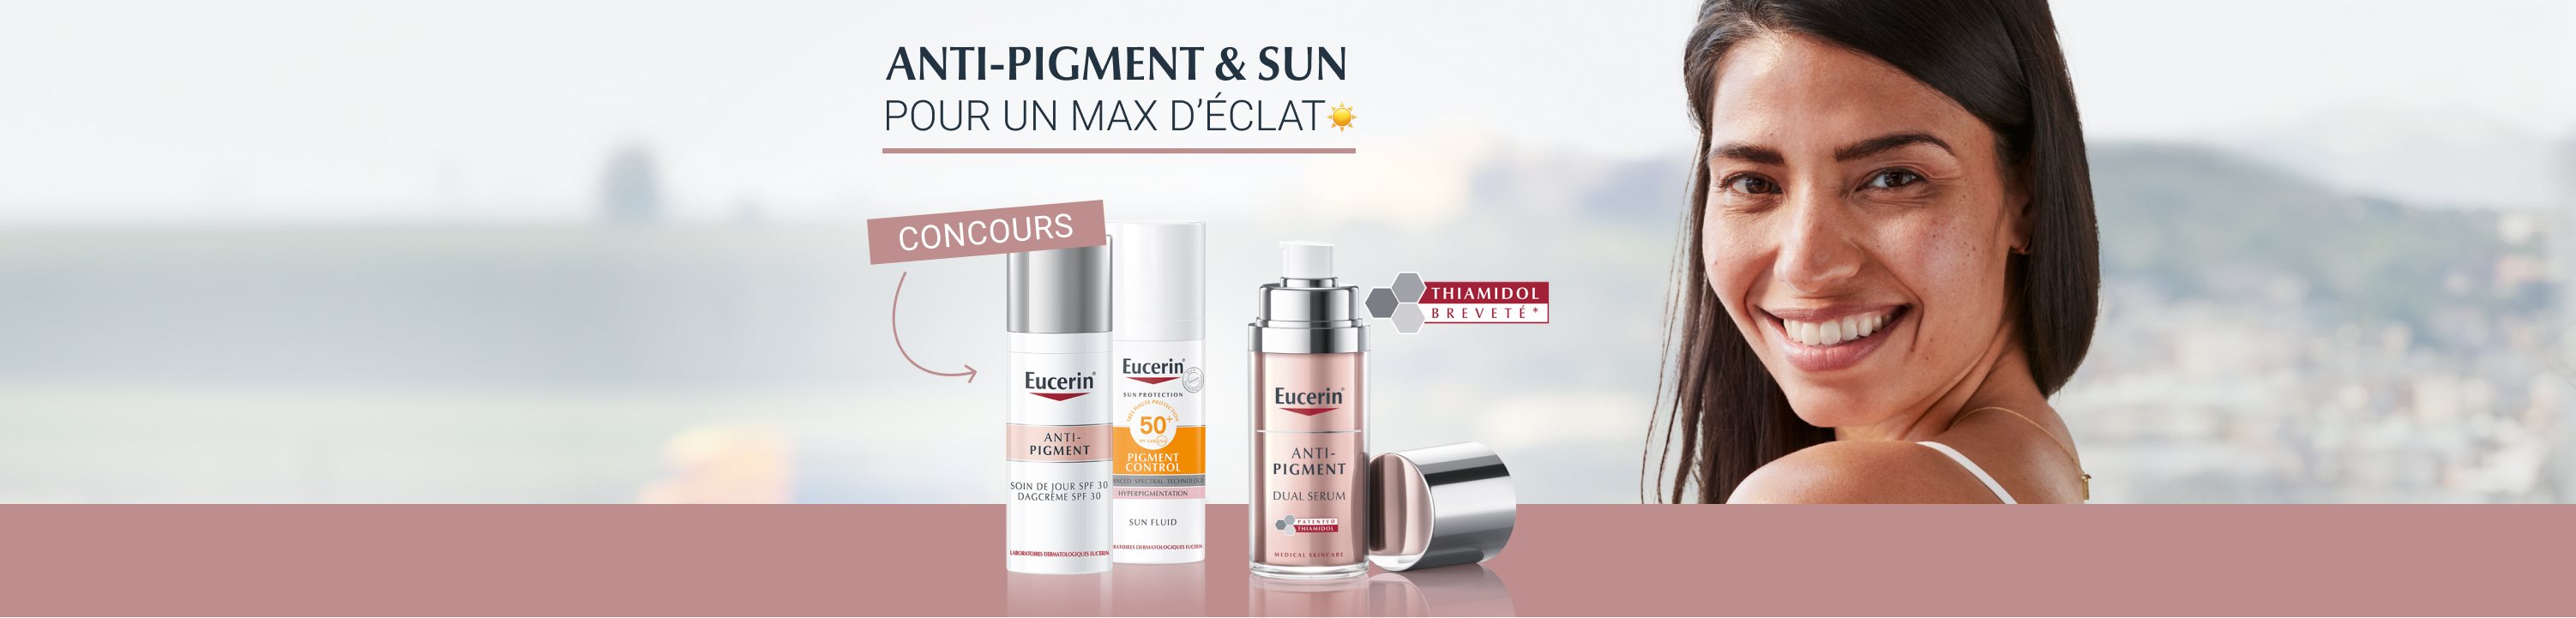 anti-pigment and sun concours eucerin